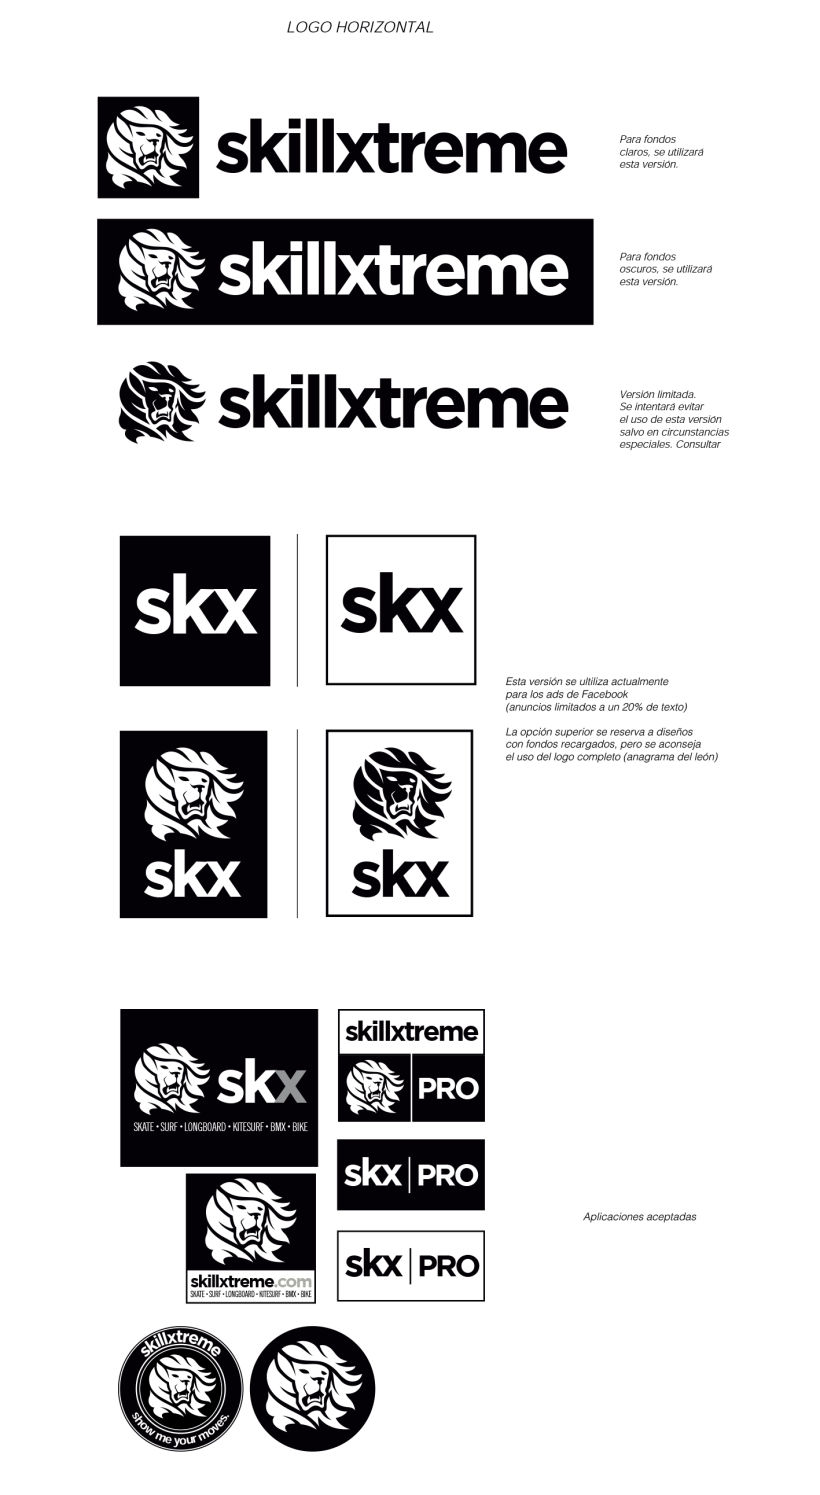 Skillxtreme (imagen visual/corporativa) 1